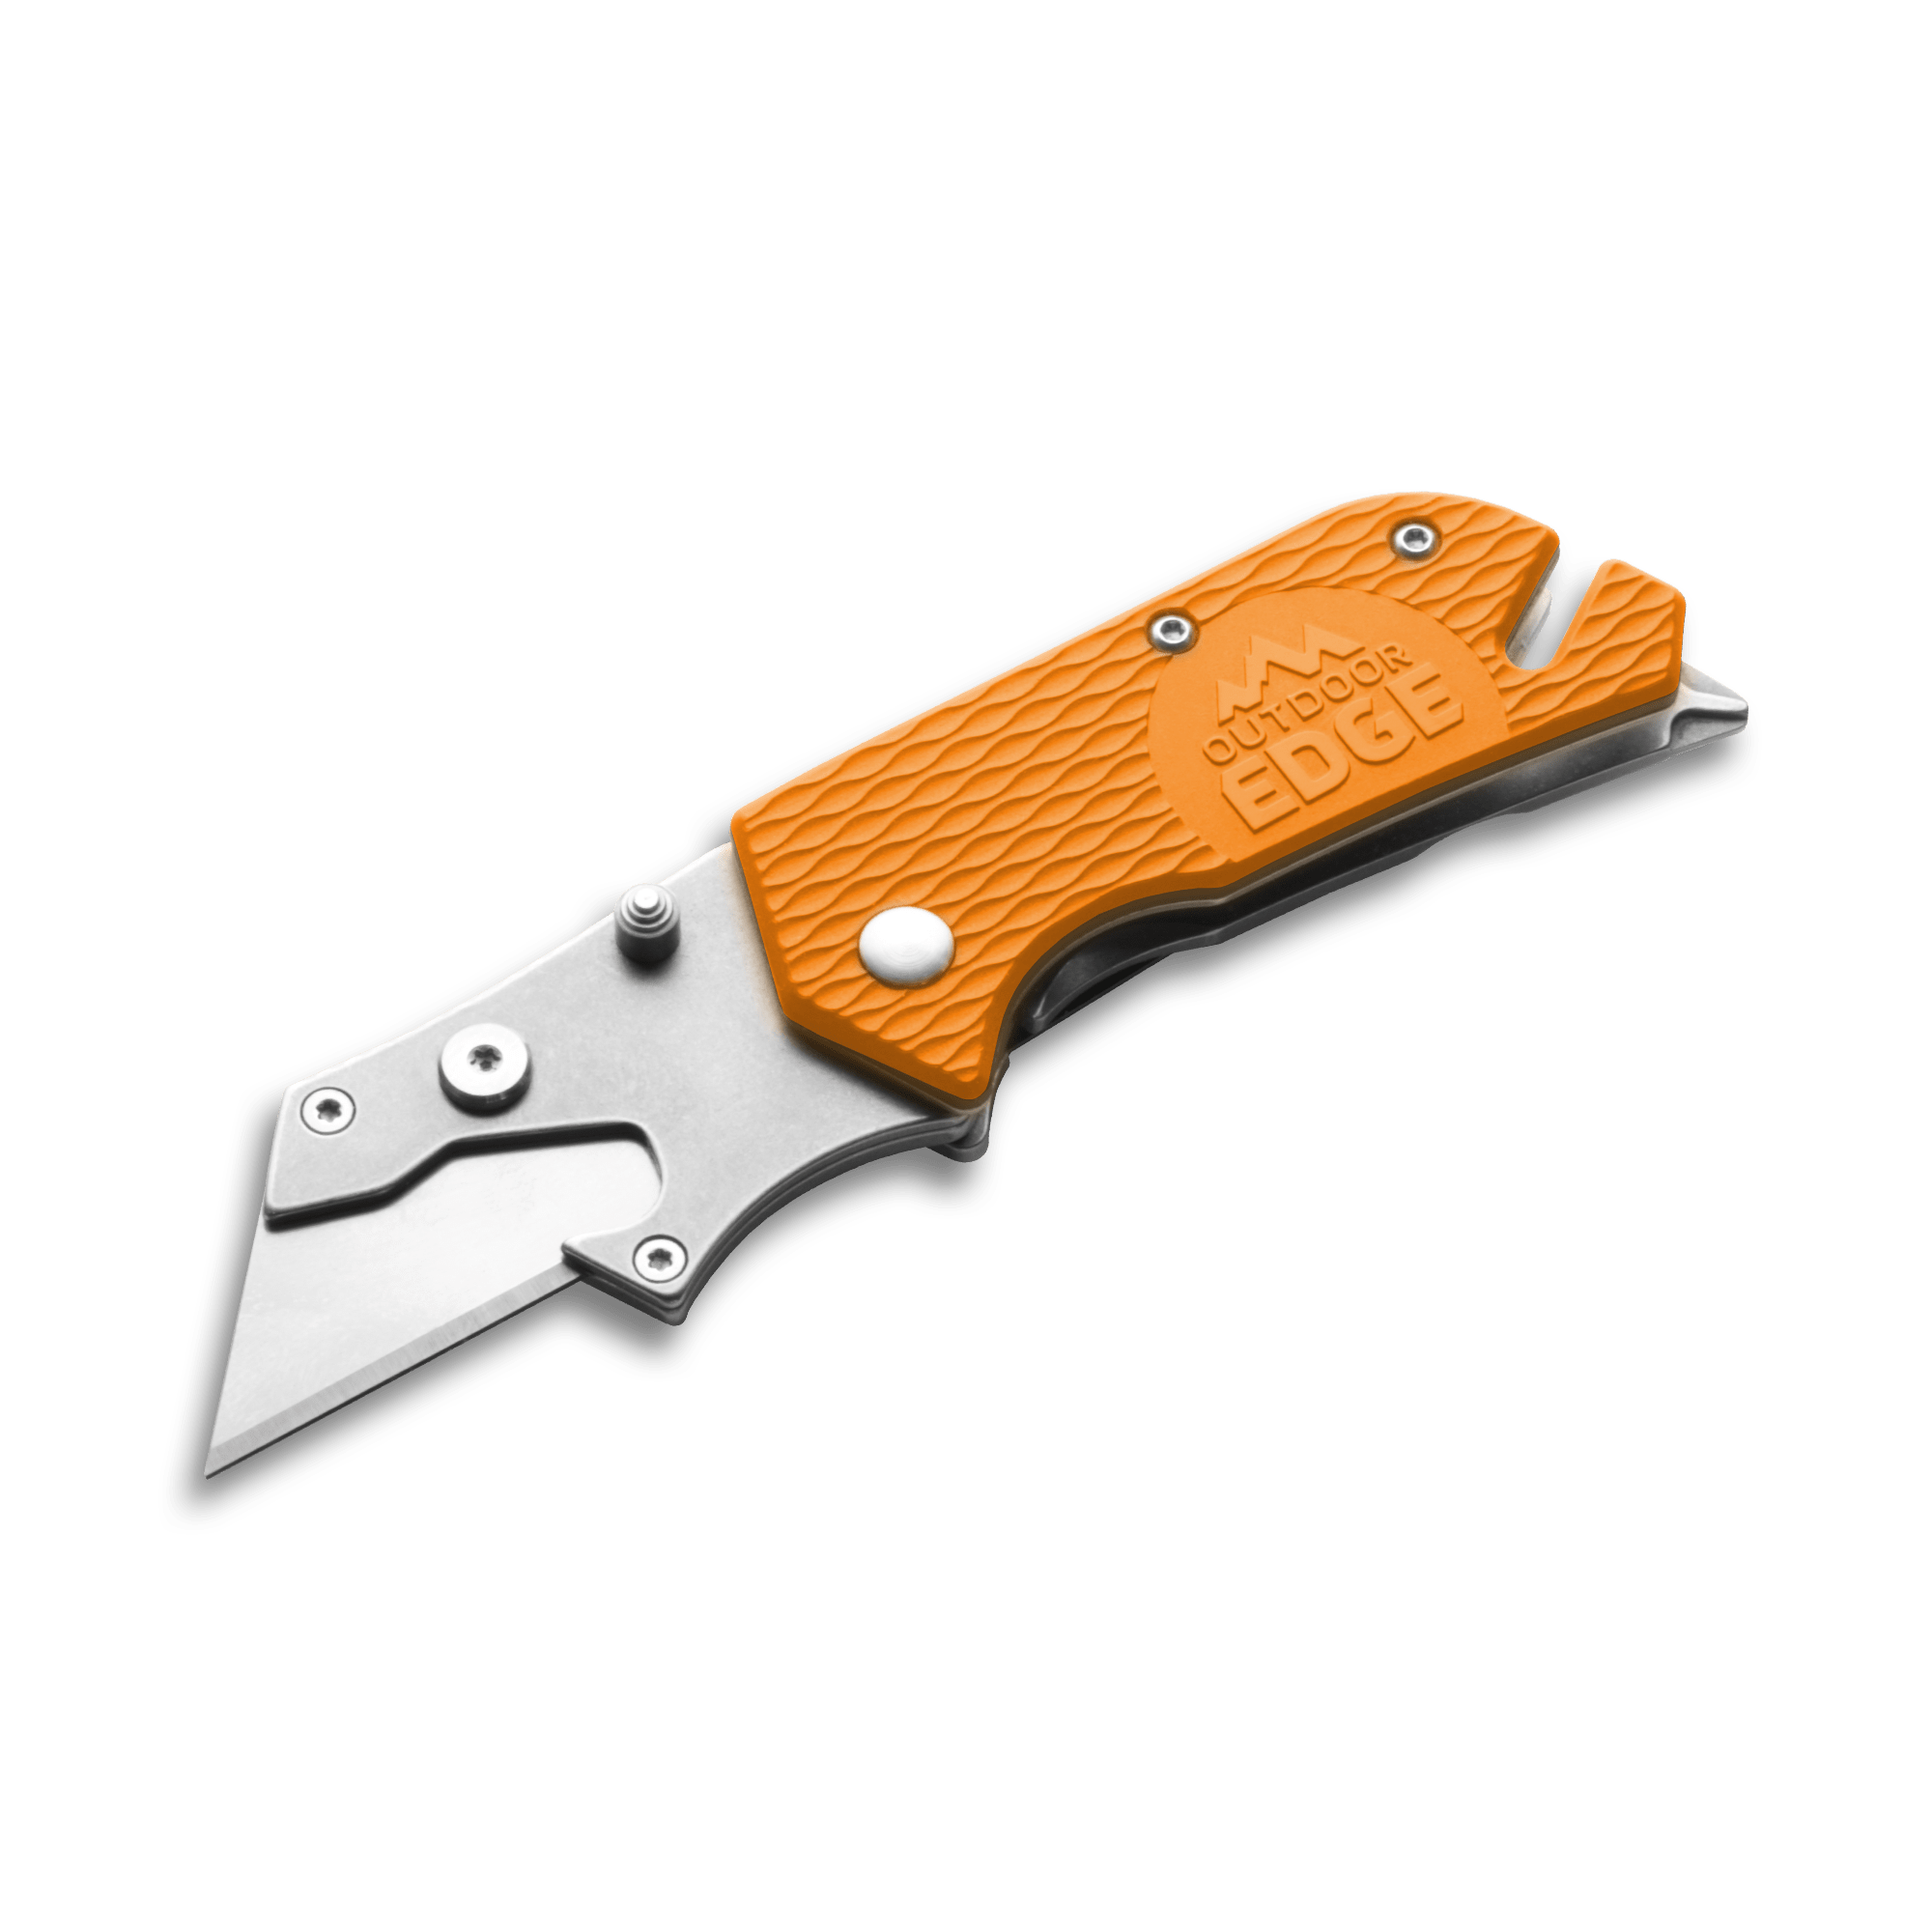 Buy Do it Best Quick Change Utility Knife Silver/Black